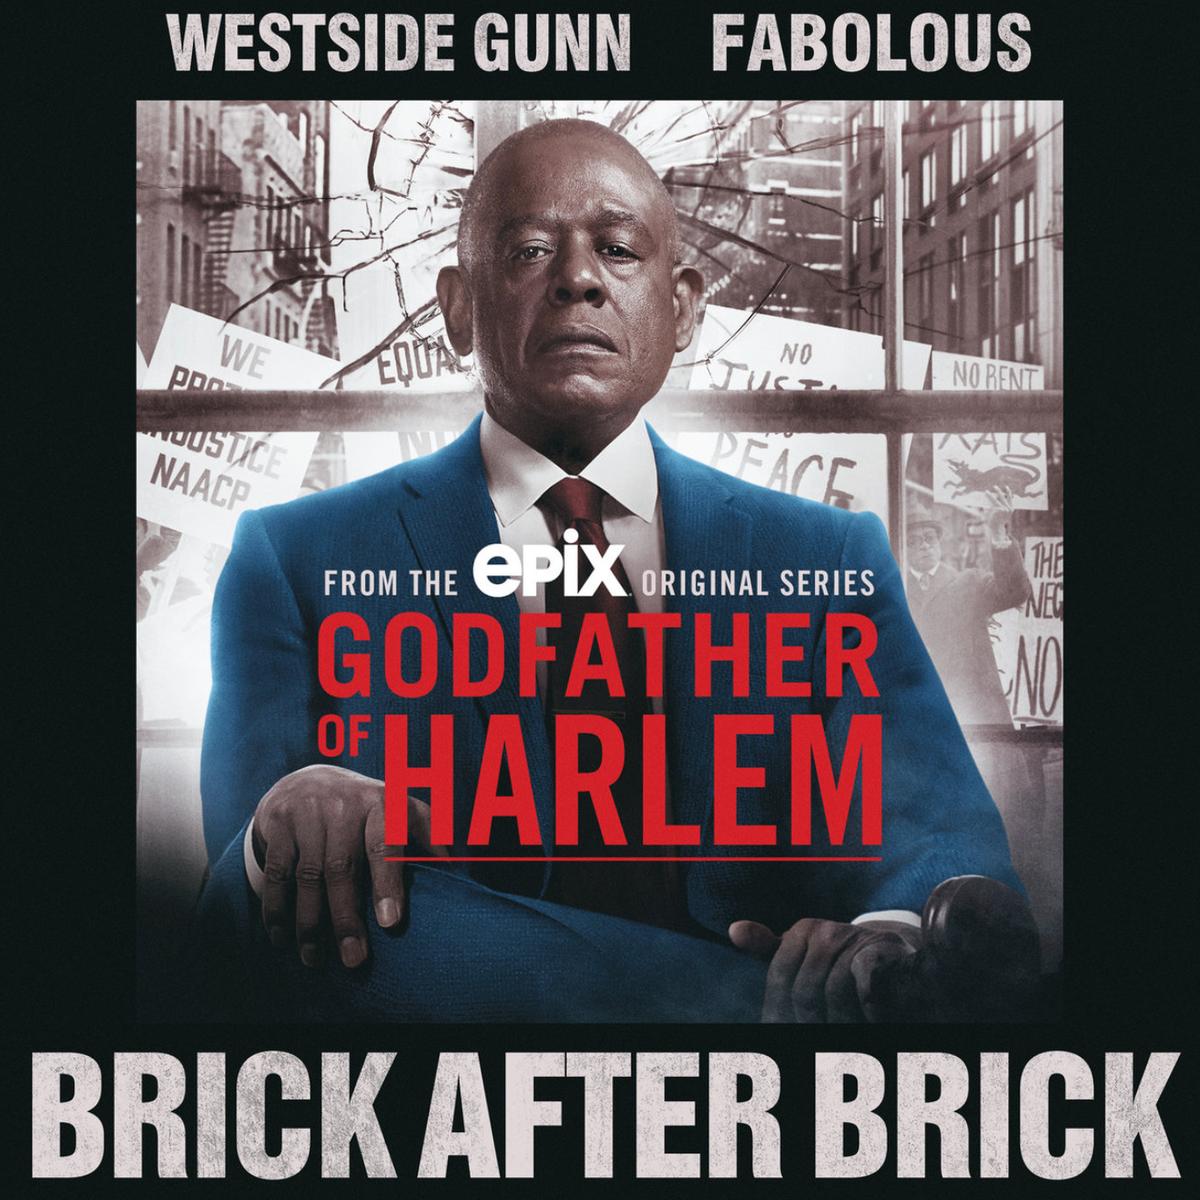 Westside Gunn & Fabolous Connect For “Brick After Brick”